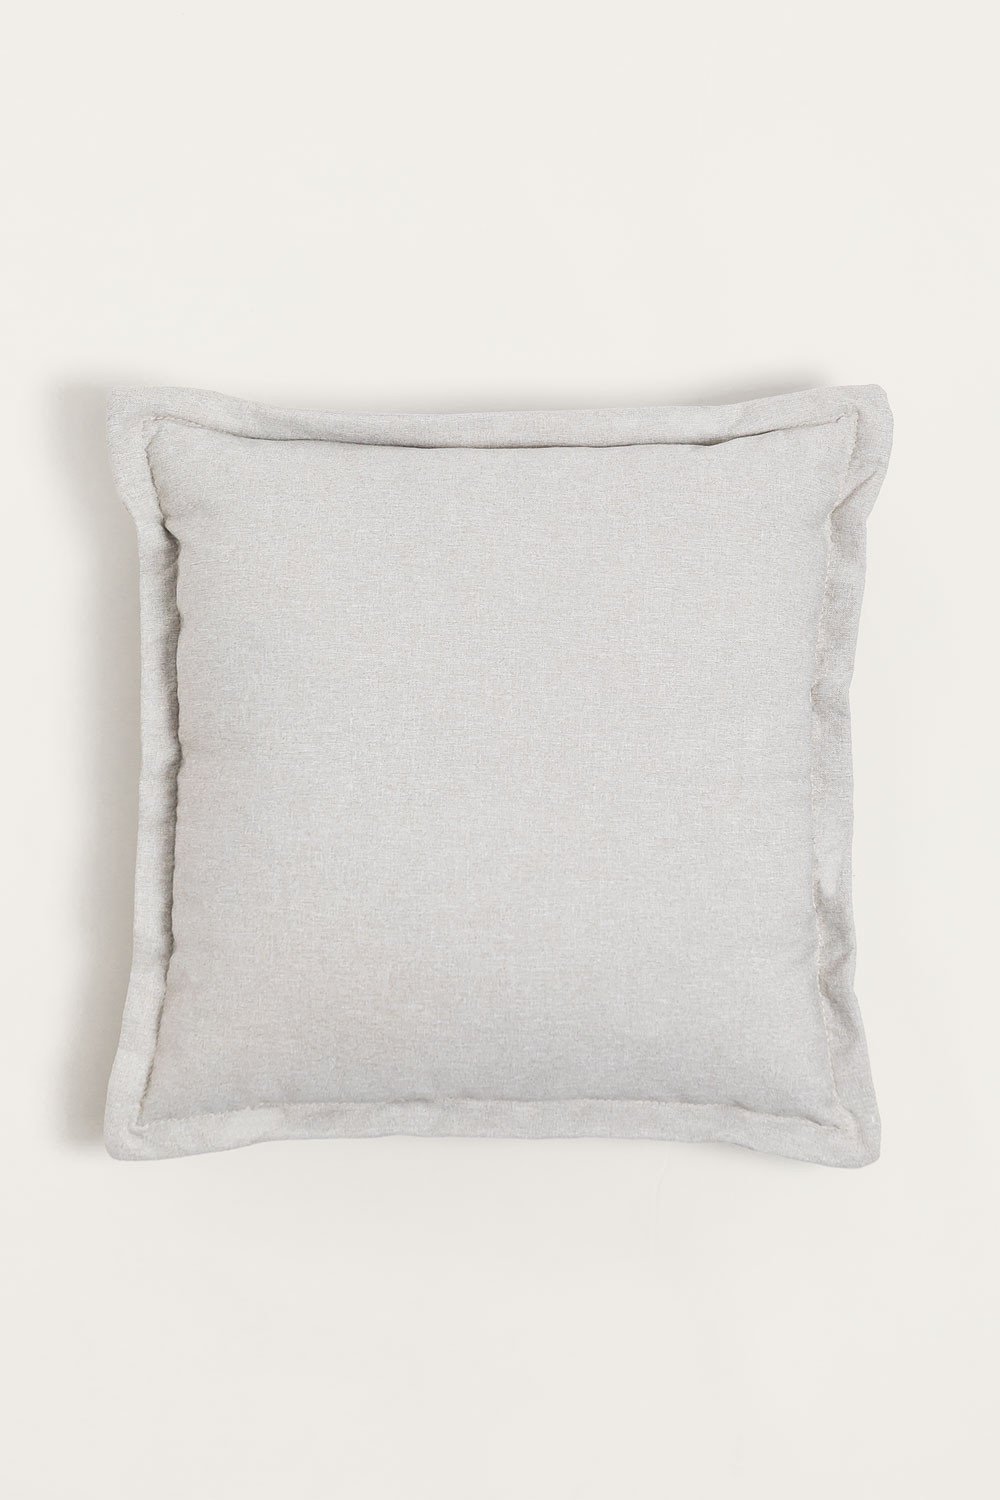 Kata Essentials square cushion (53x53 cm) , gallery image 1